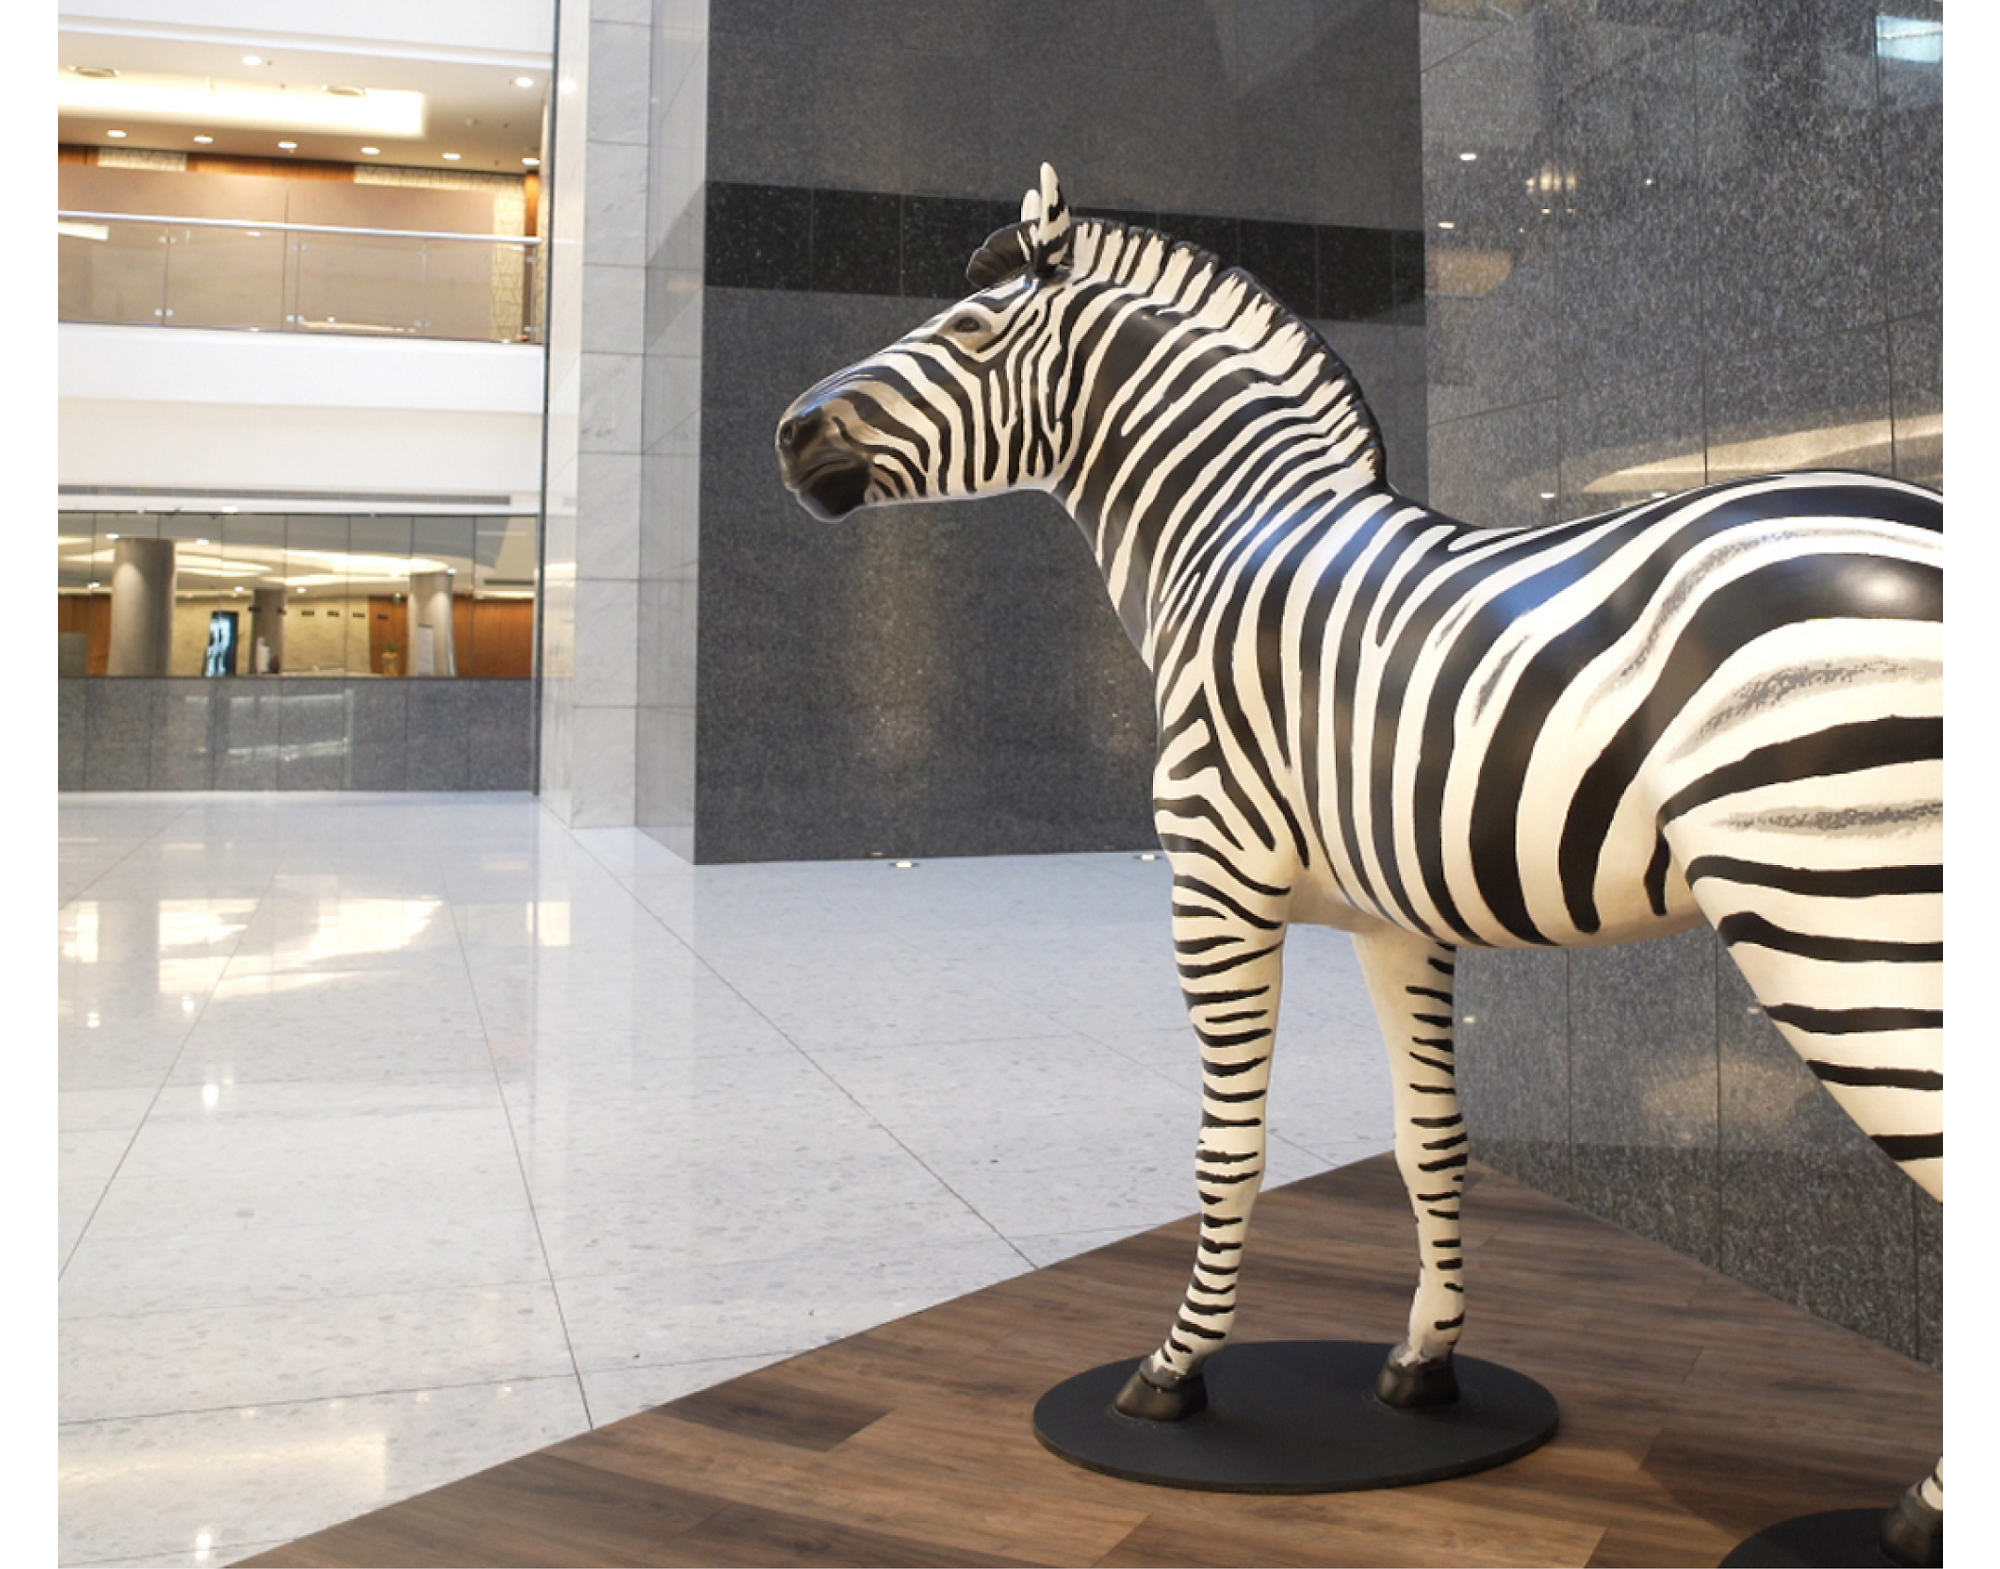 Patung zebra di lobi bangunan modern dengan lantai marmer dan balkon bertingkat di latar belakang.